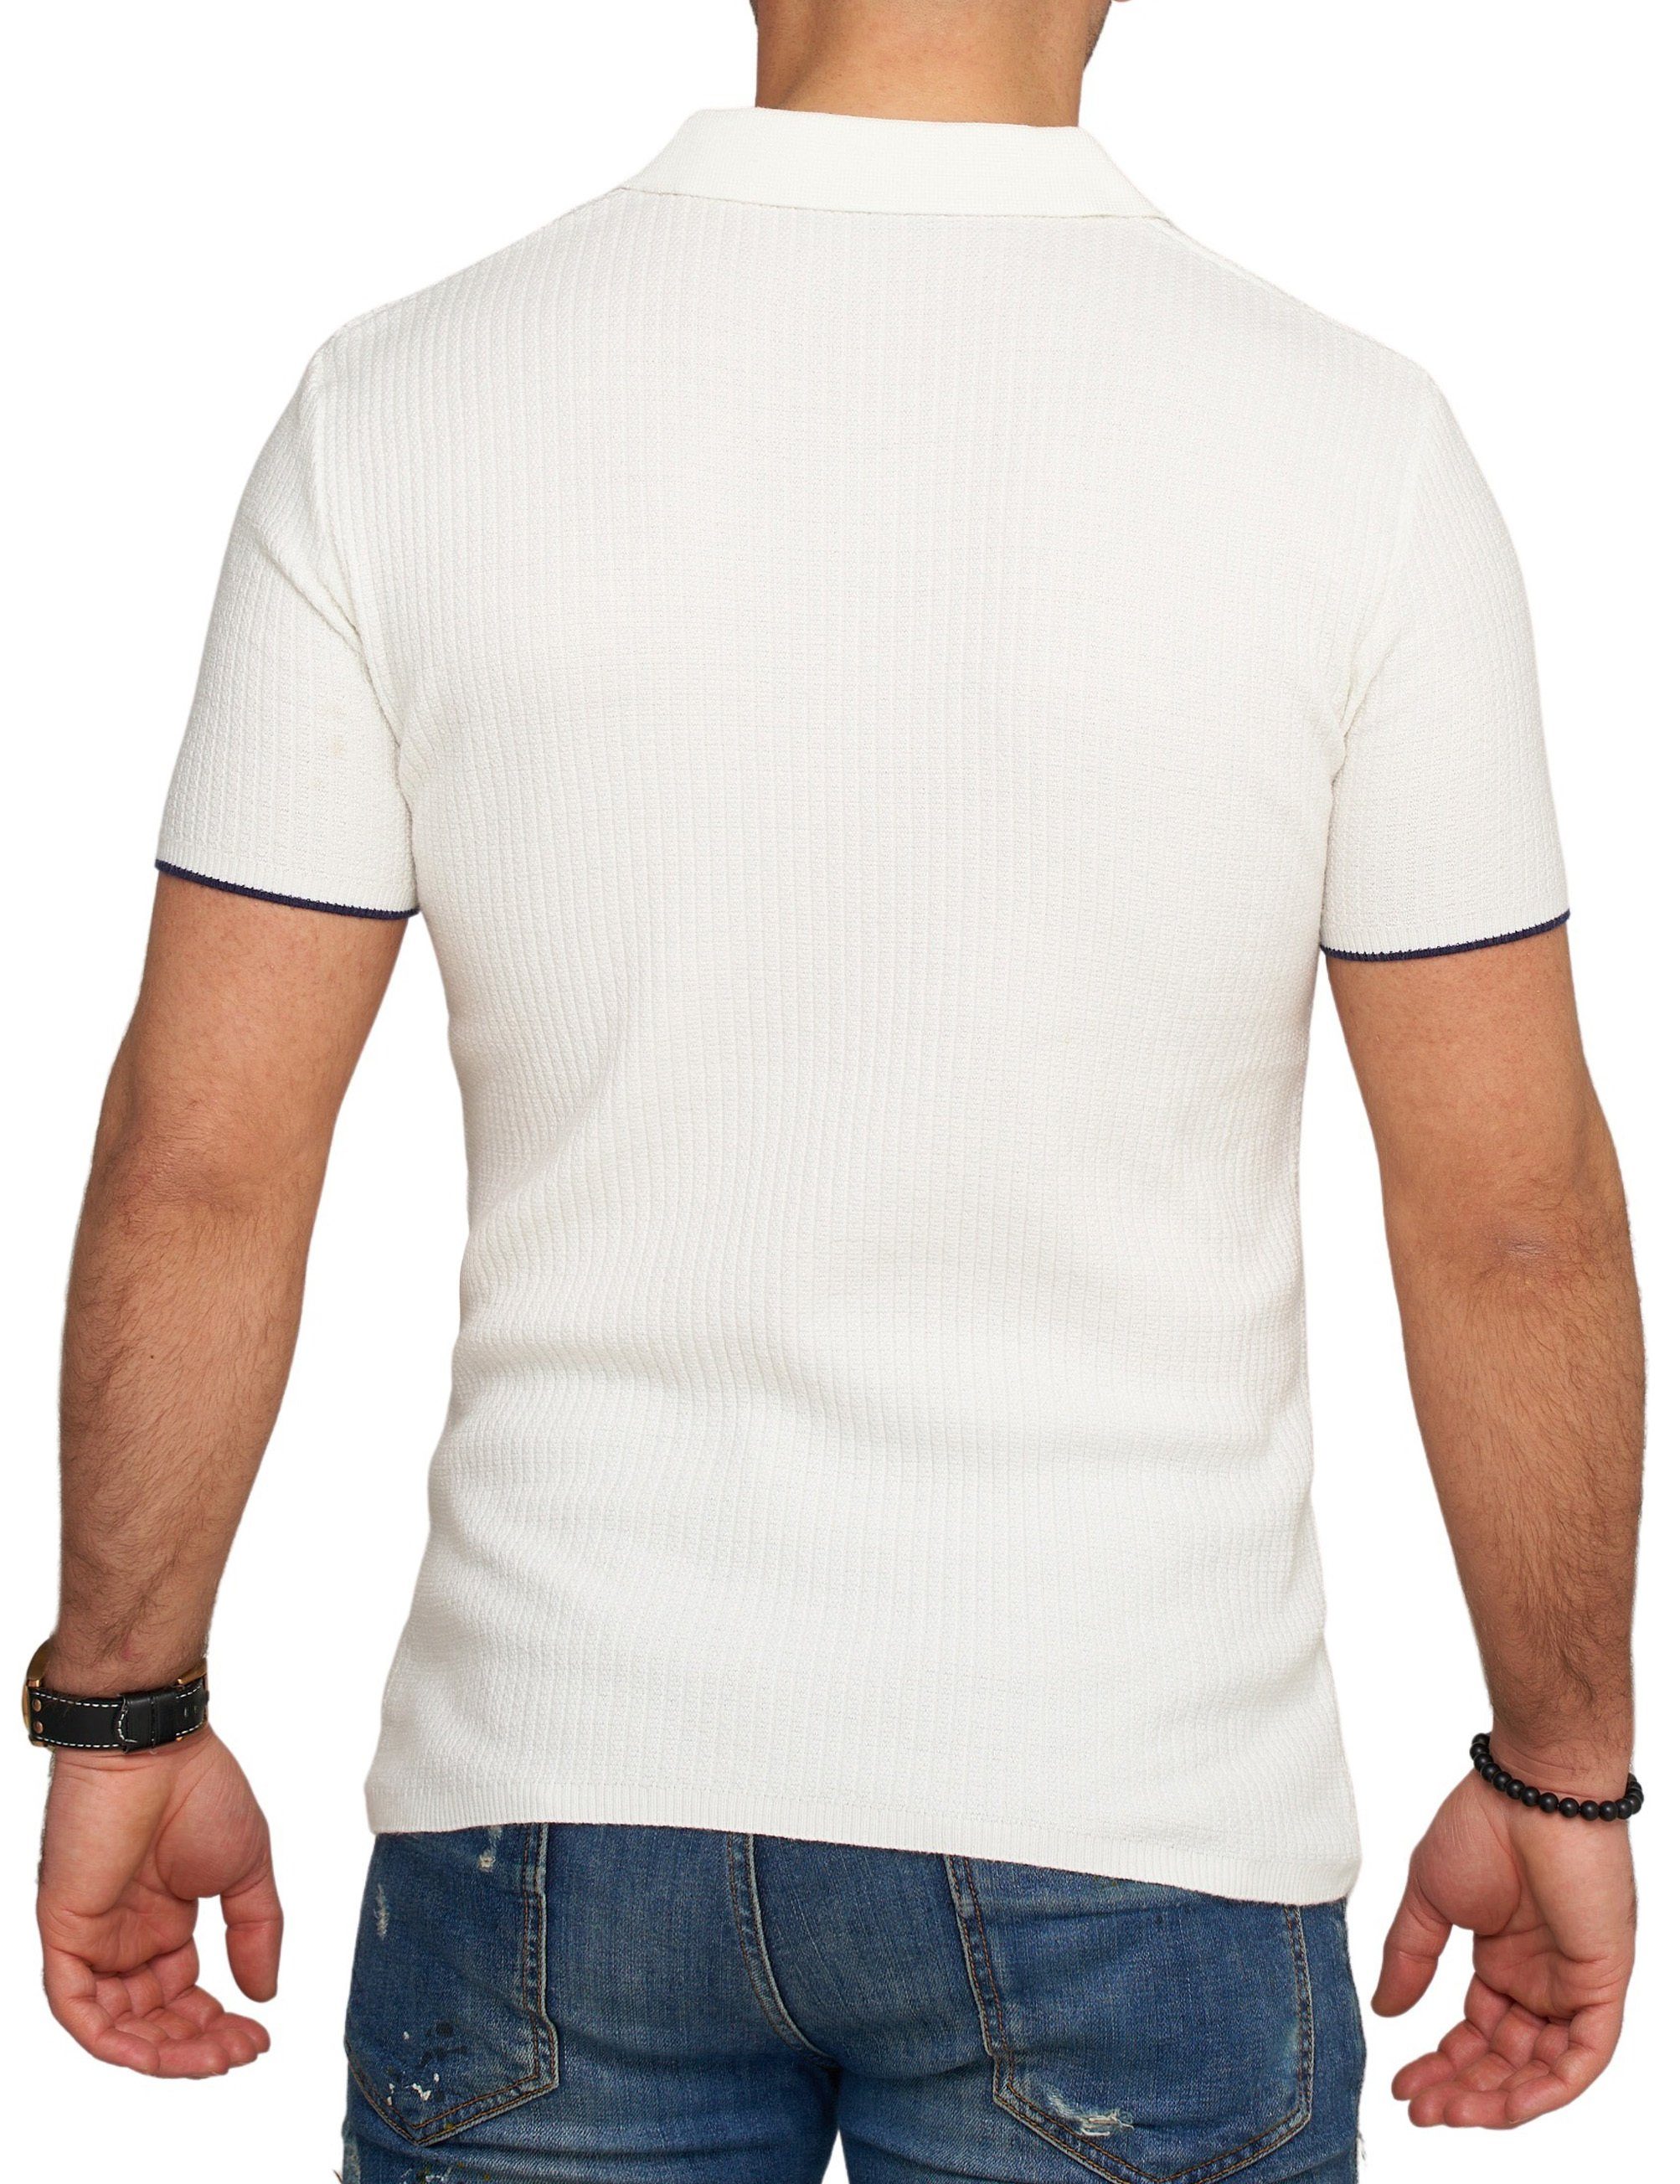 Kurzarm Polo CRMANAUS Weiß Rippstrick T-Shirt CARISMA Poloshirt